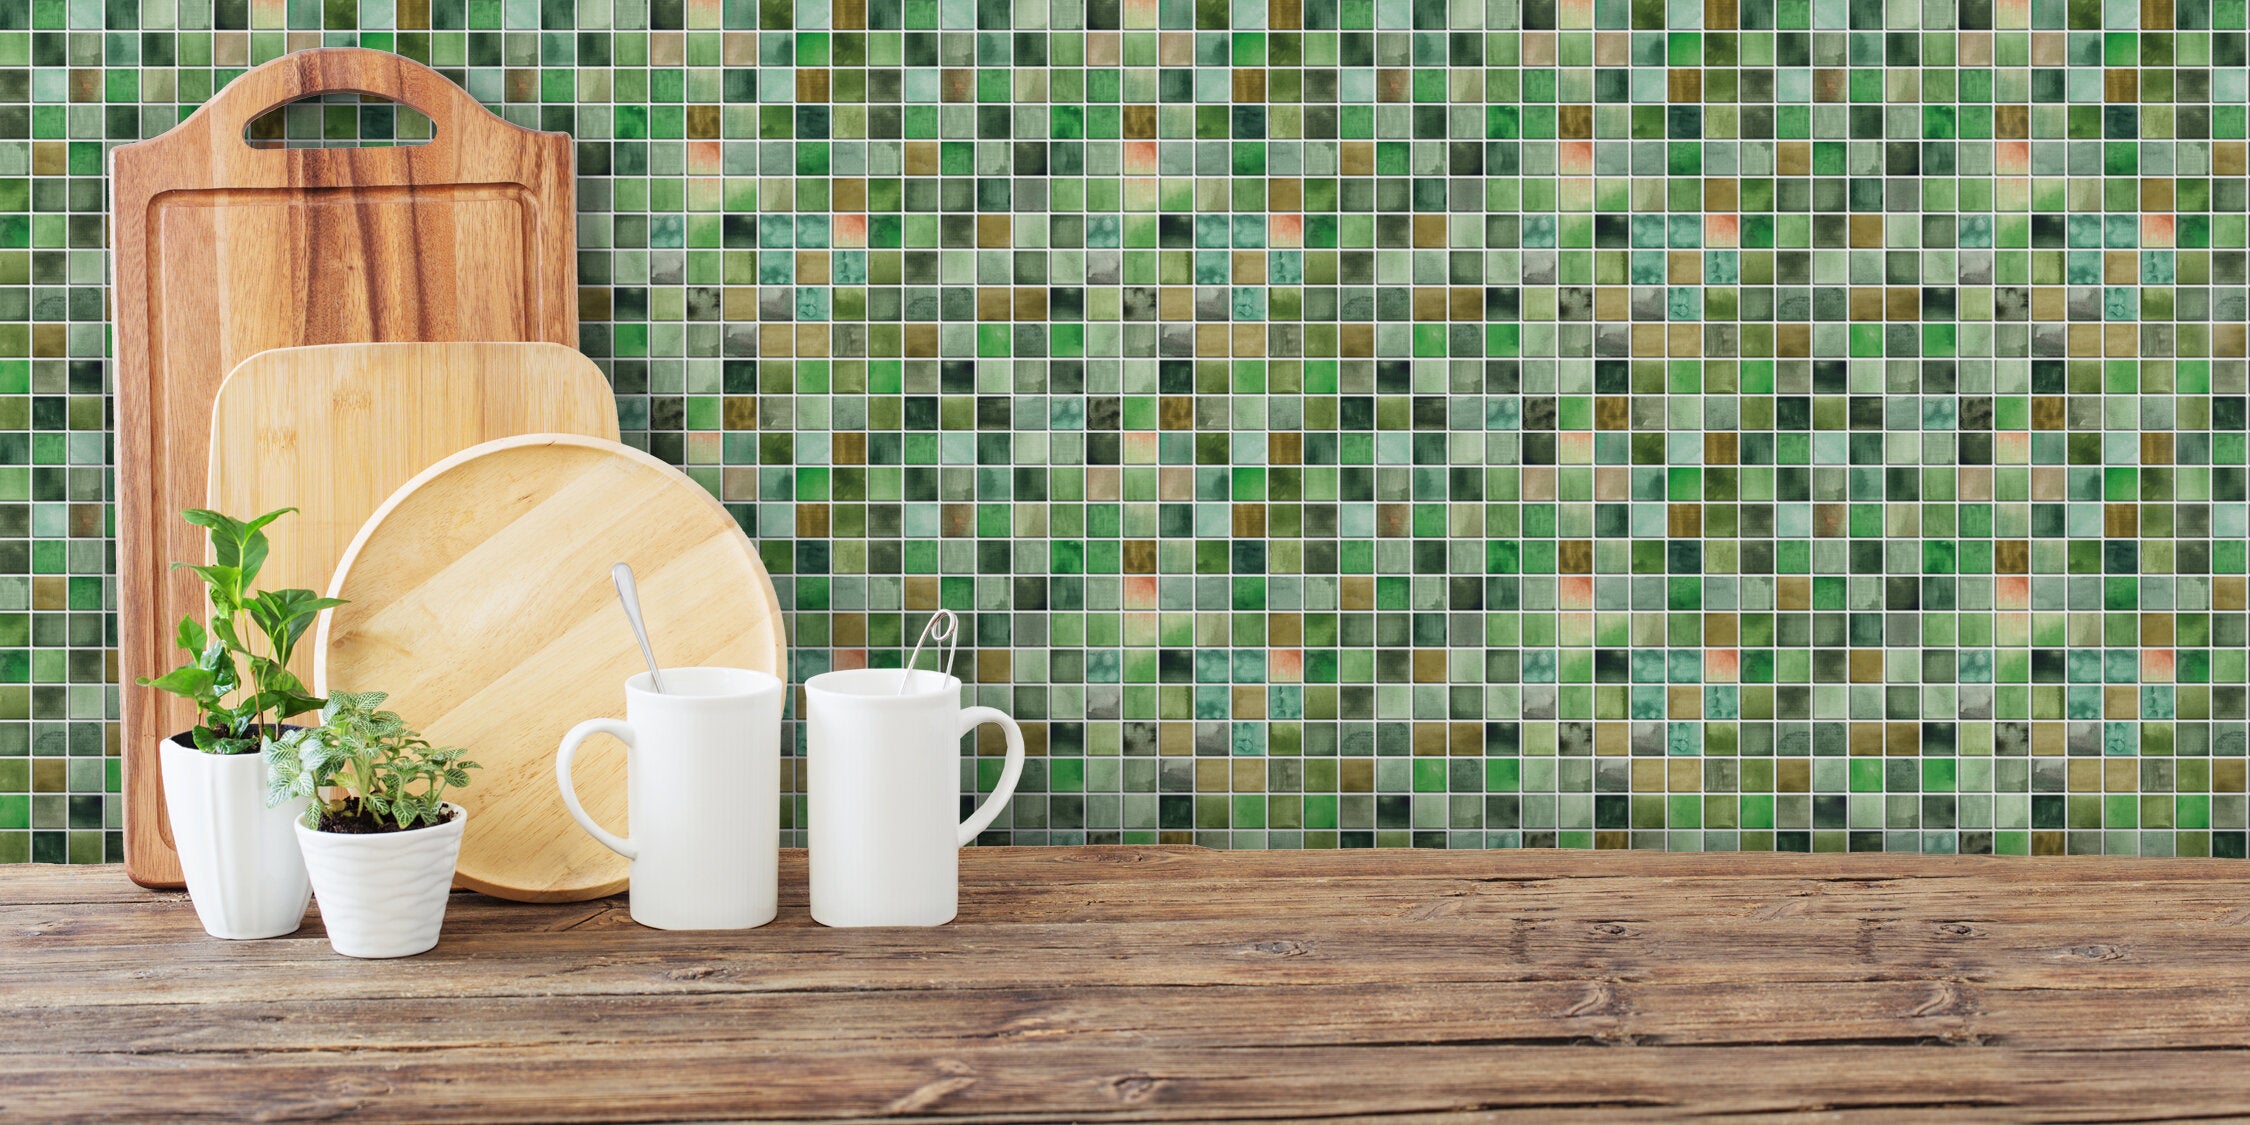 Peel and Stick Self adhesive Backsplash DIY Kitchen Bathroom Home Wall tile